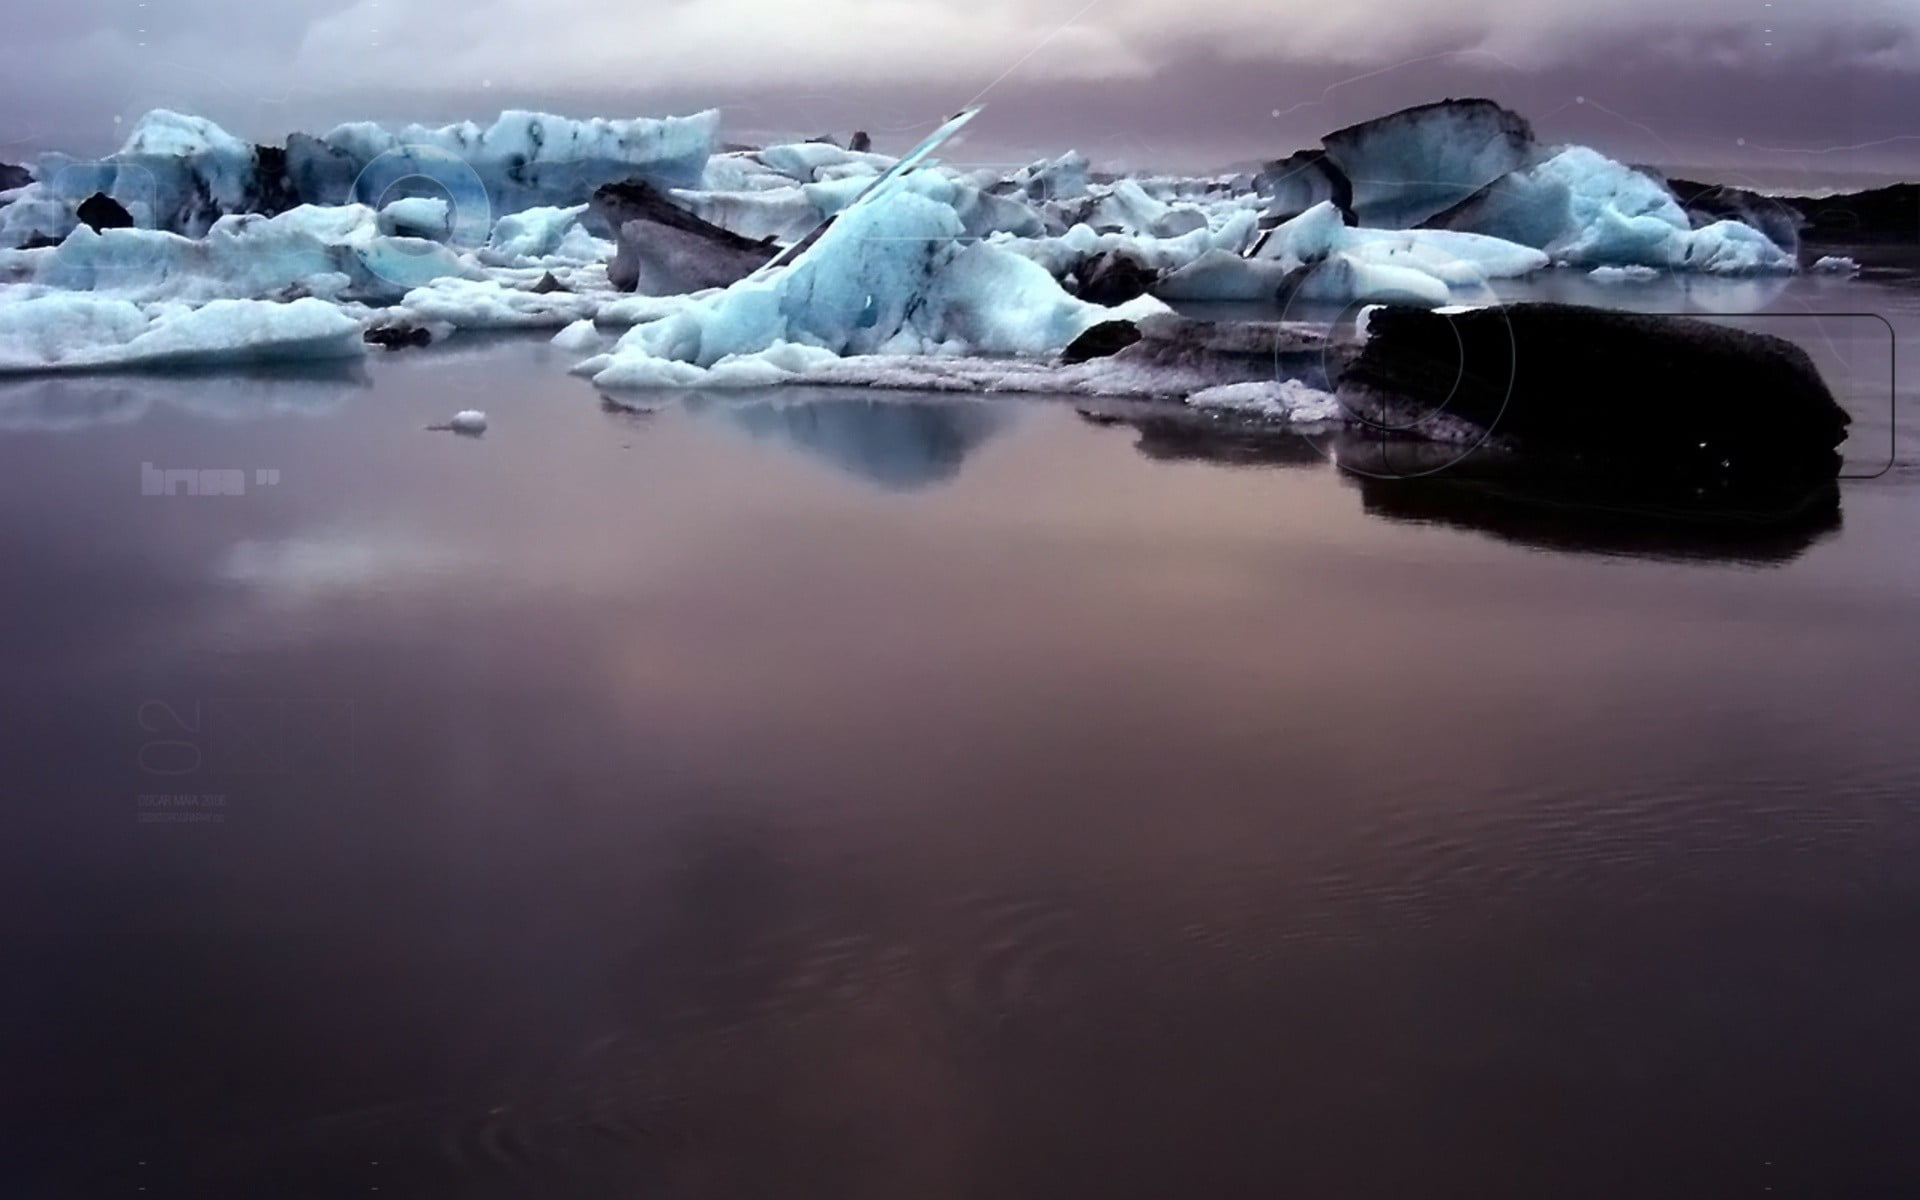 ice berg, Desktopography, nature, ice, iceberg